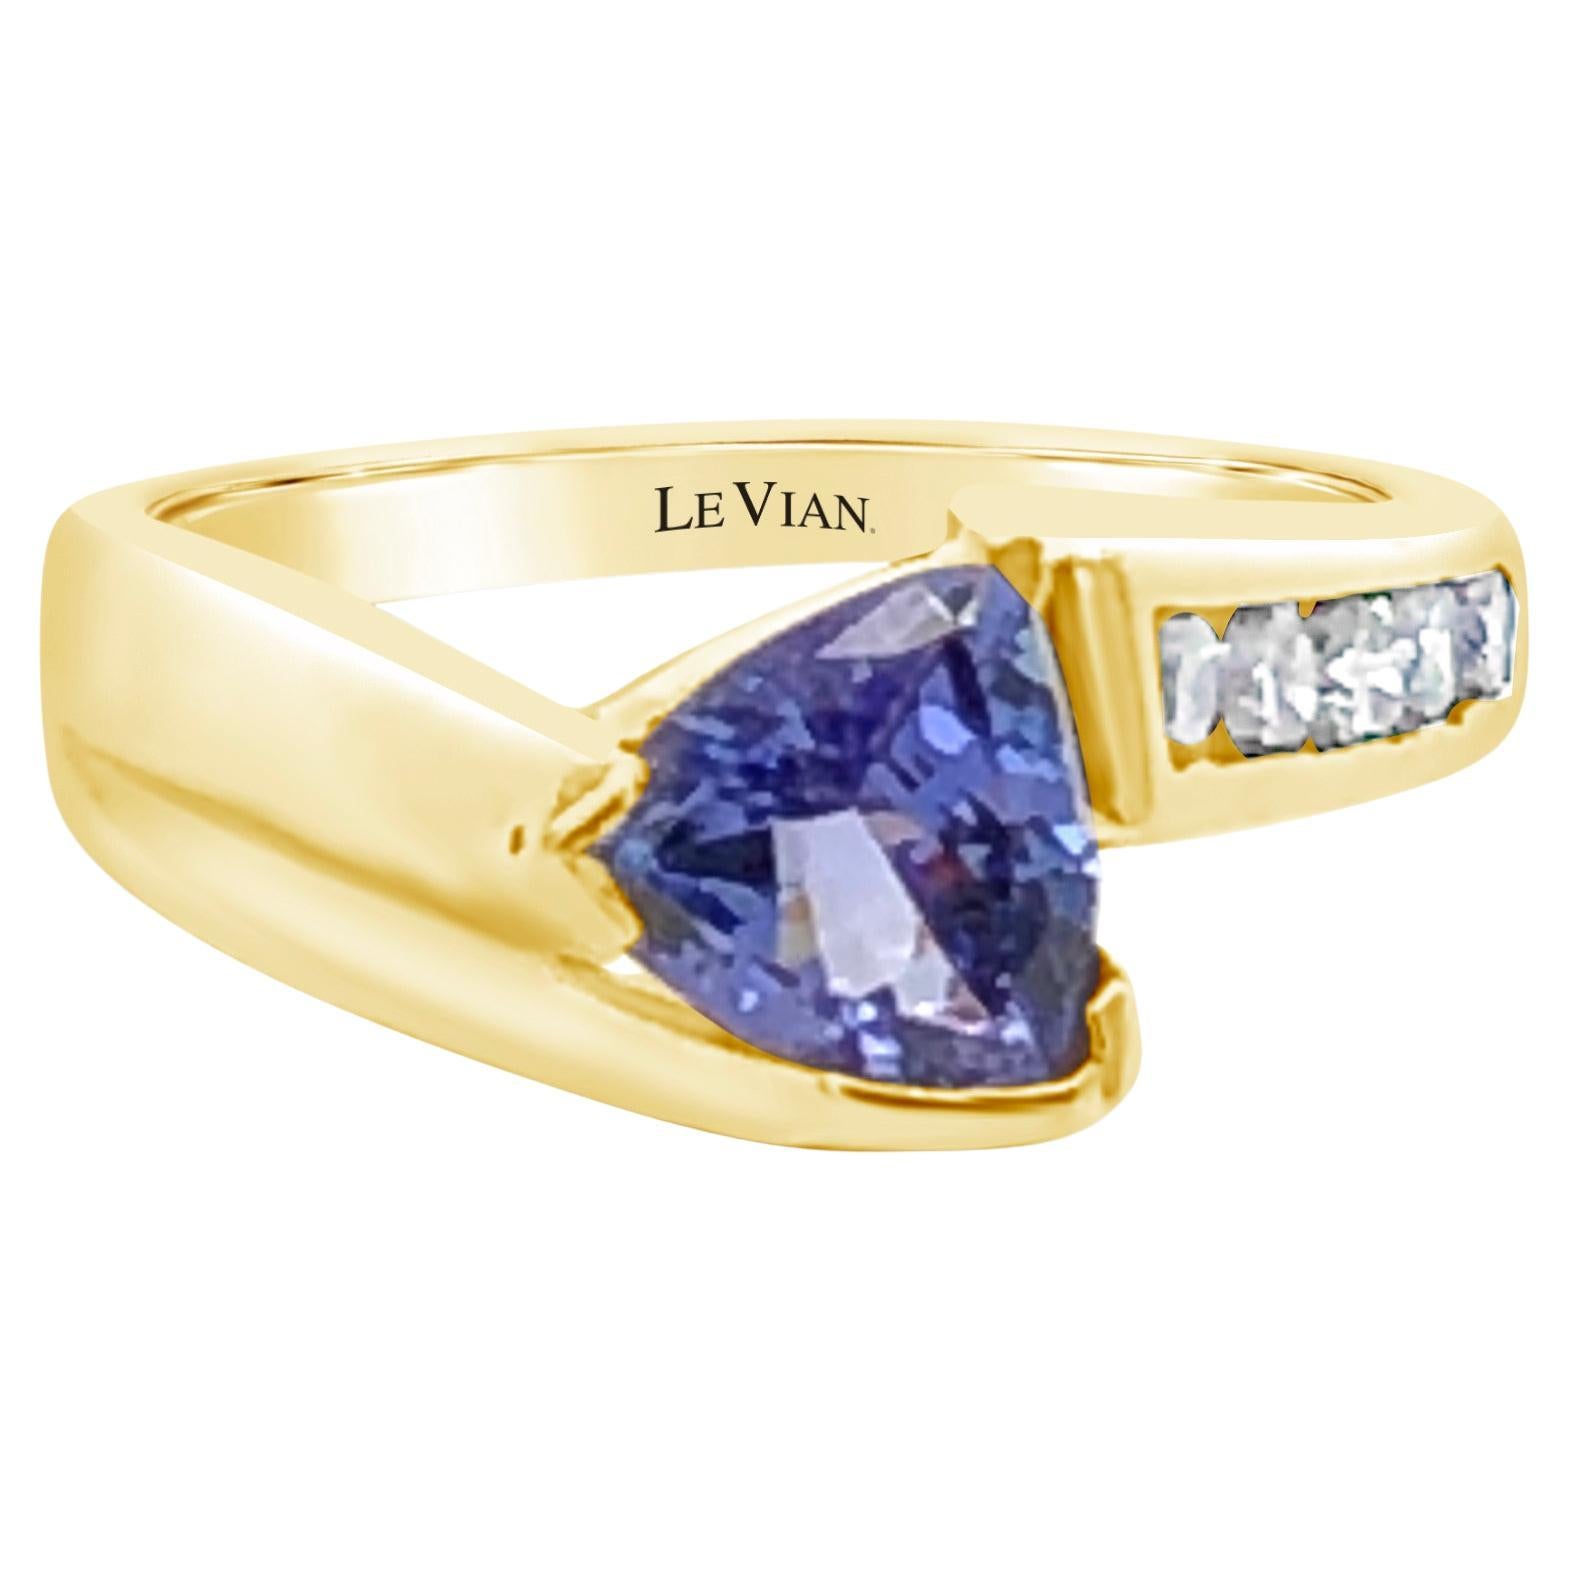 Levian 18K Yellow Gold Trillion Cut Tanzanite Diamond Fashion Ring Size 4.75